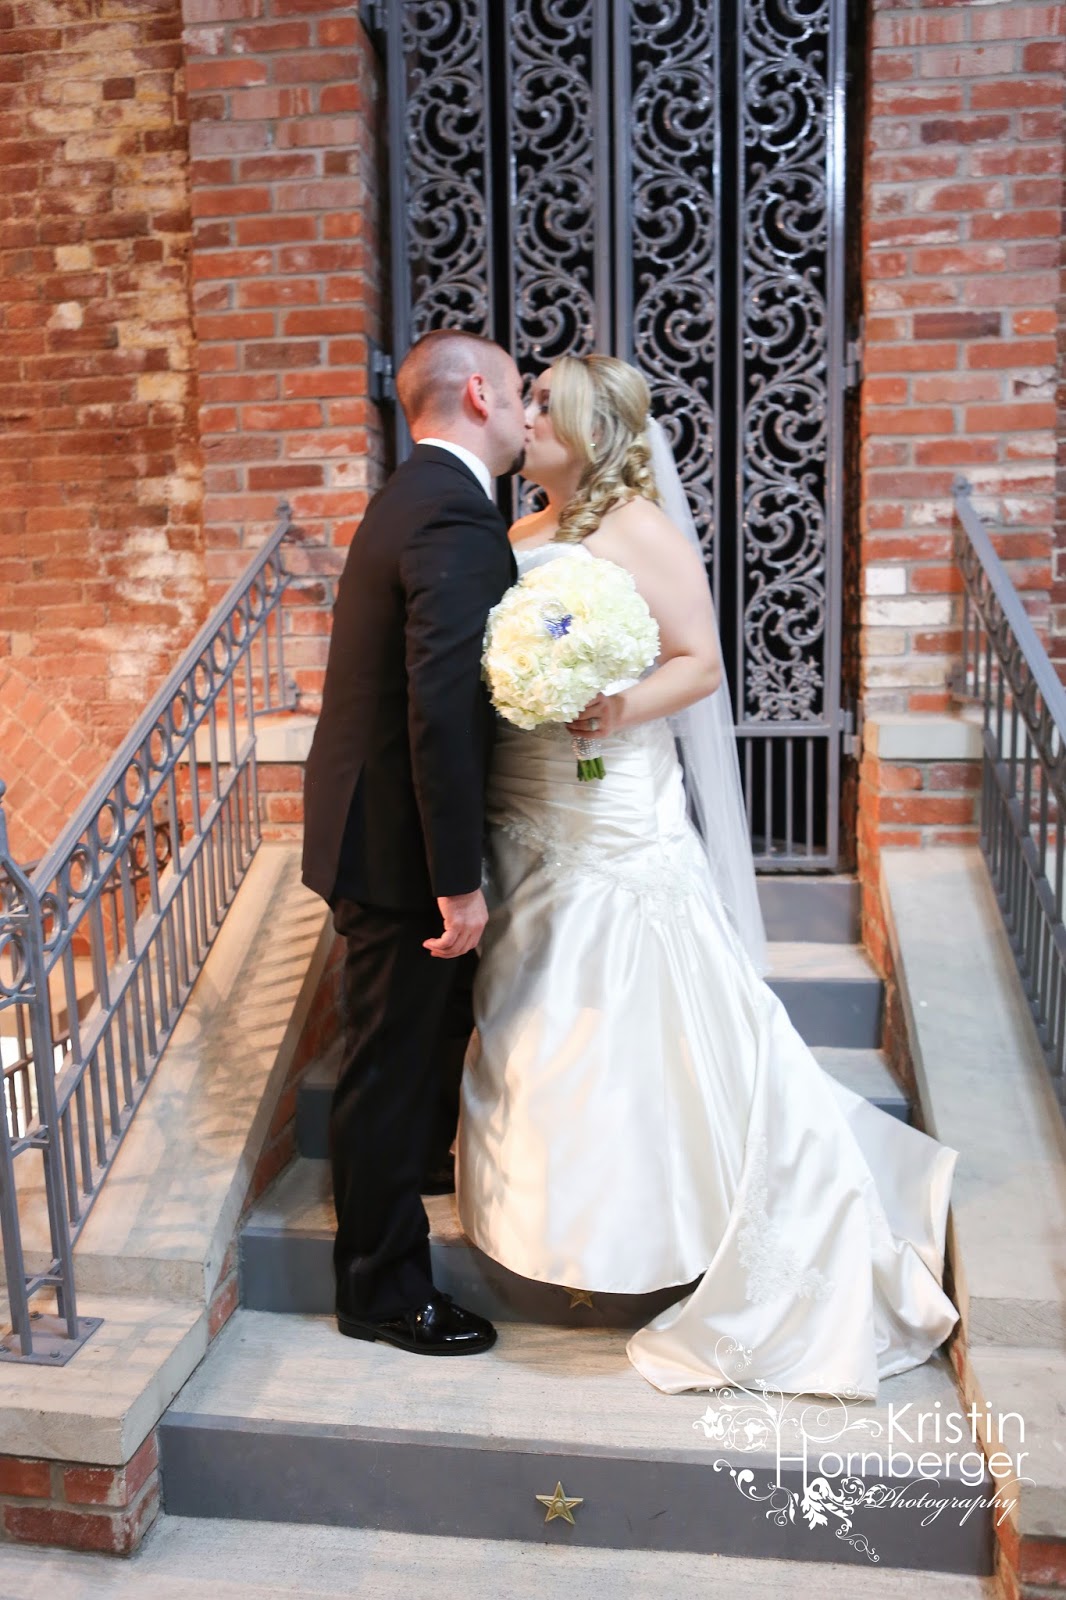 Kristin H Photos Blog: Erin + Todd = Married! | Noblesville, IN ...